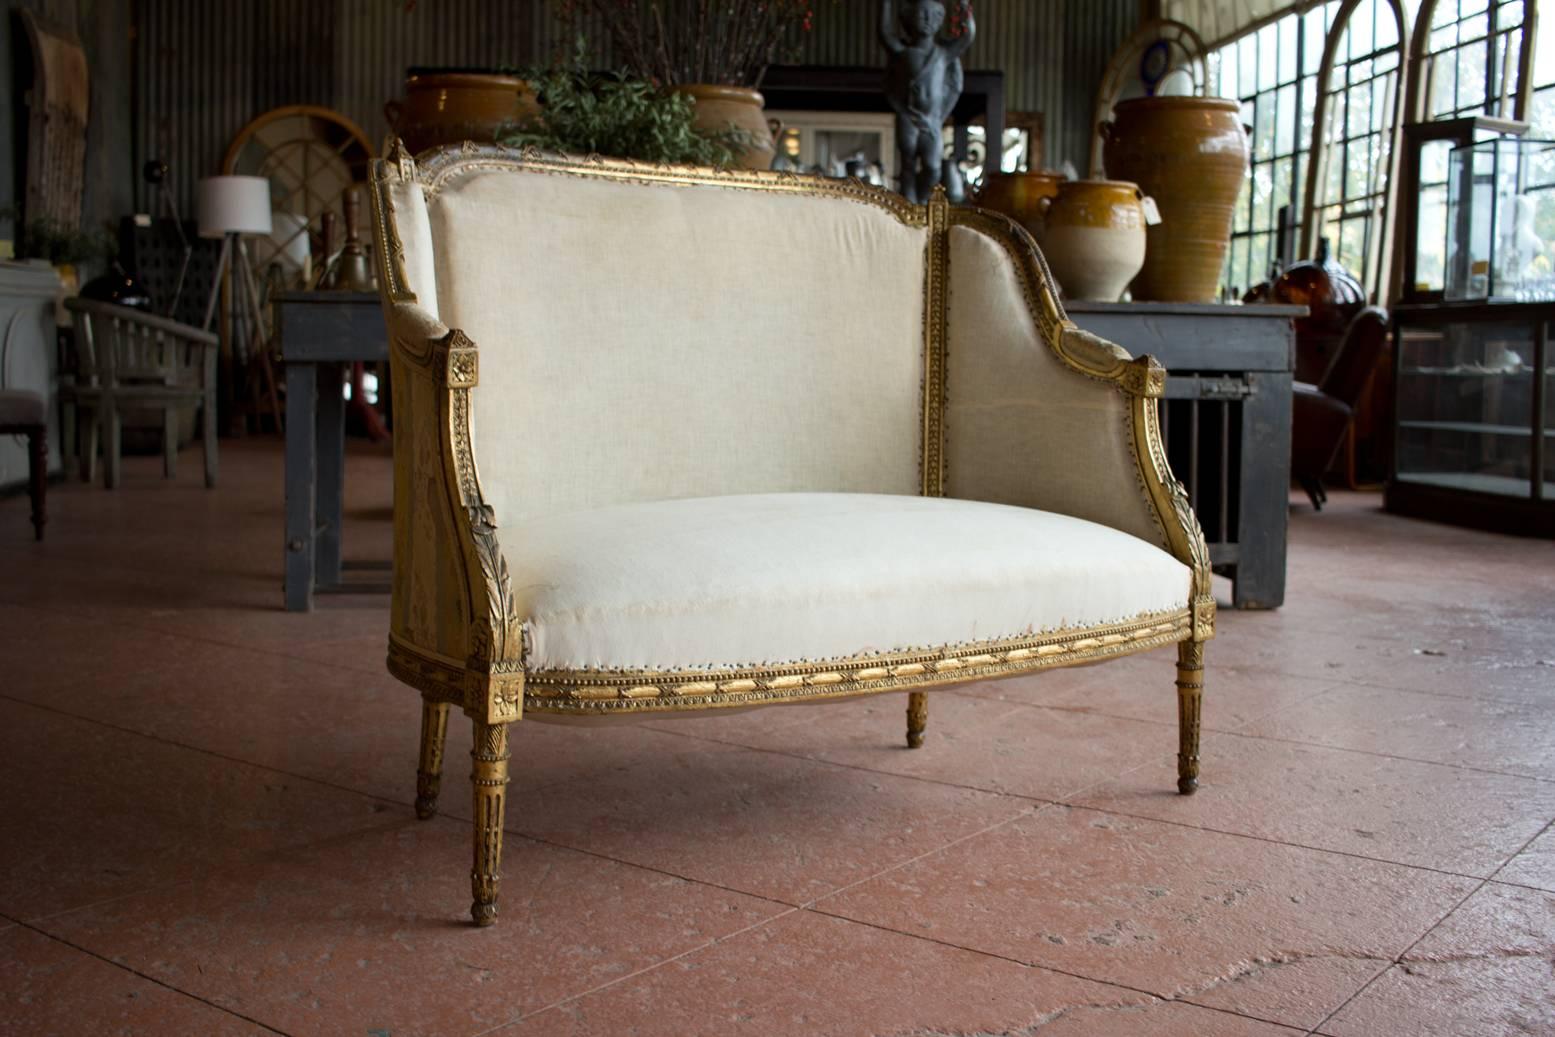 Antique Louis XVI petite bergère settee settee with original gilded frame.